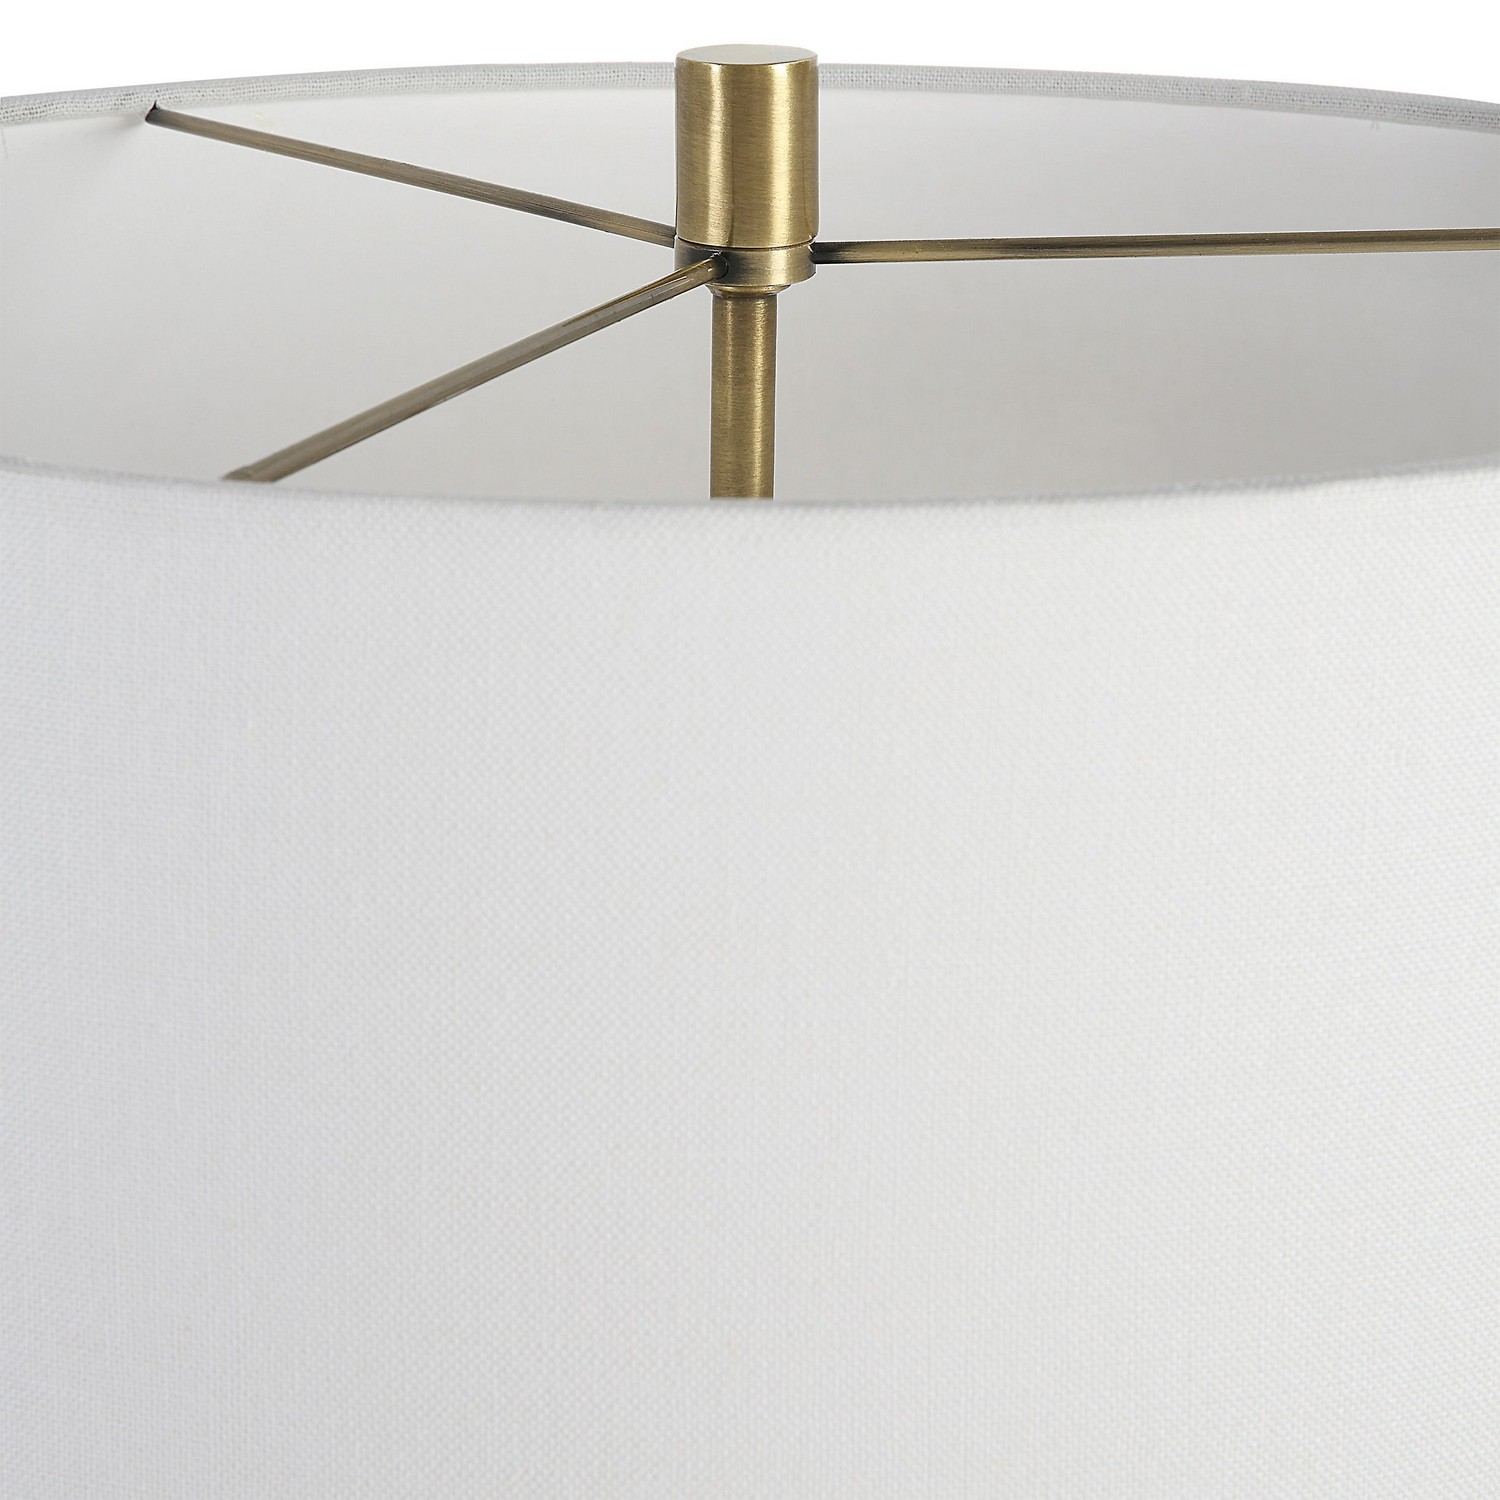 Uttermost Pantheon Rod Table Lamp - Brass